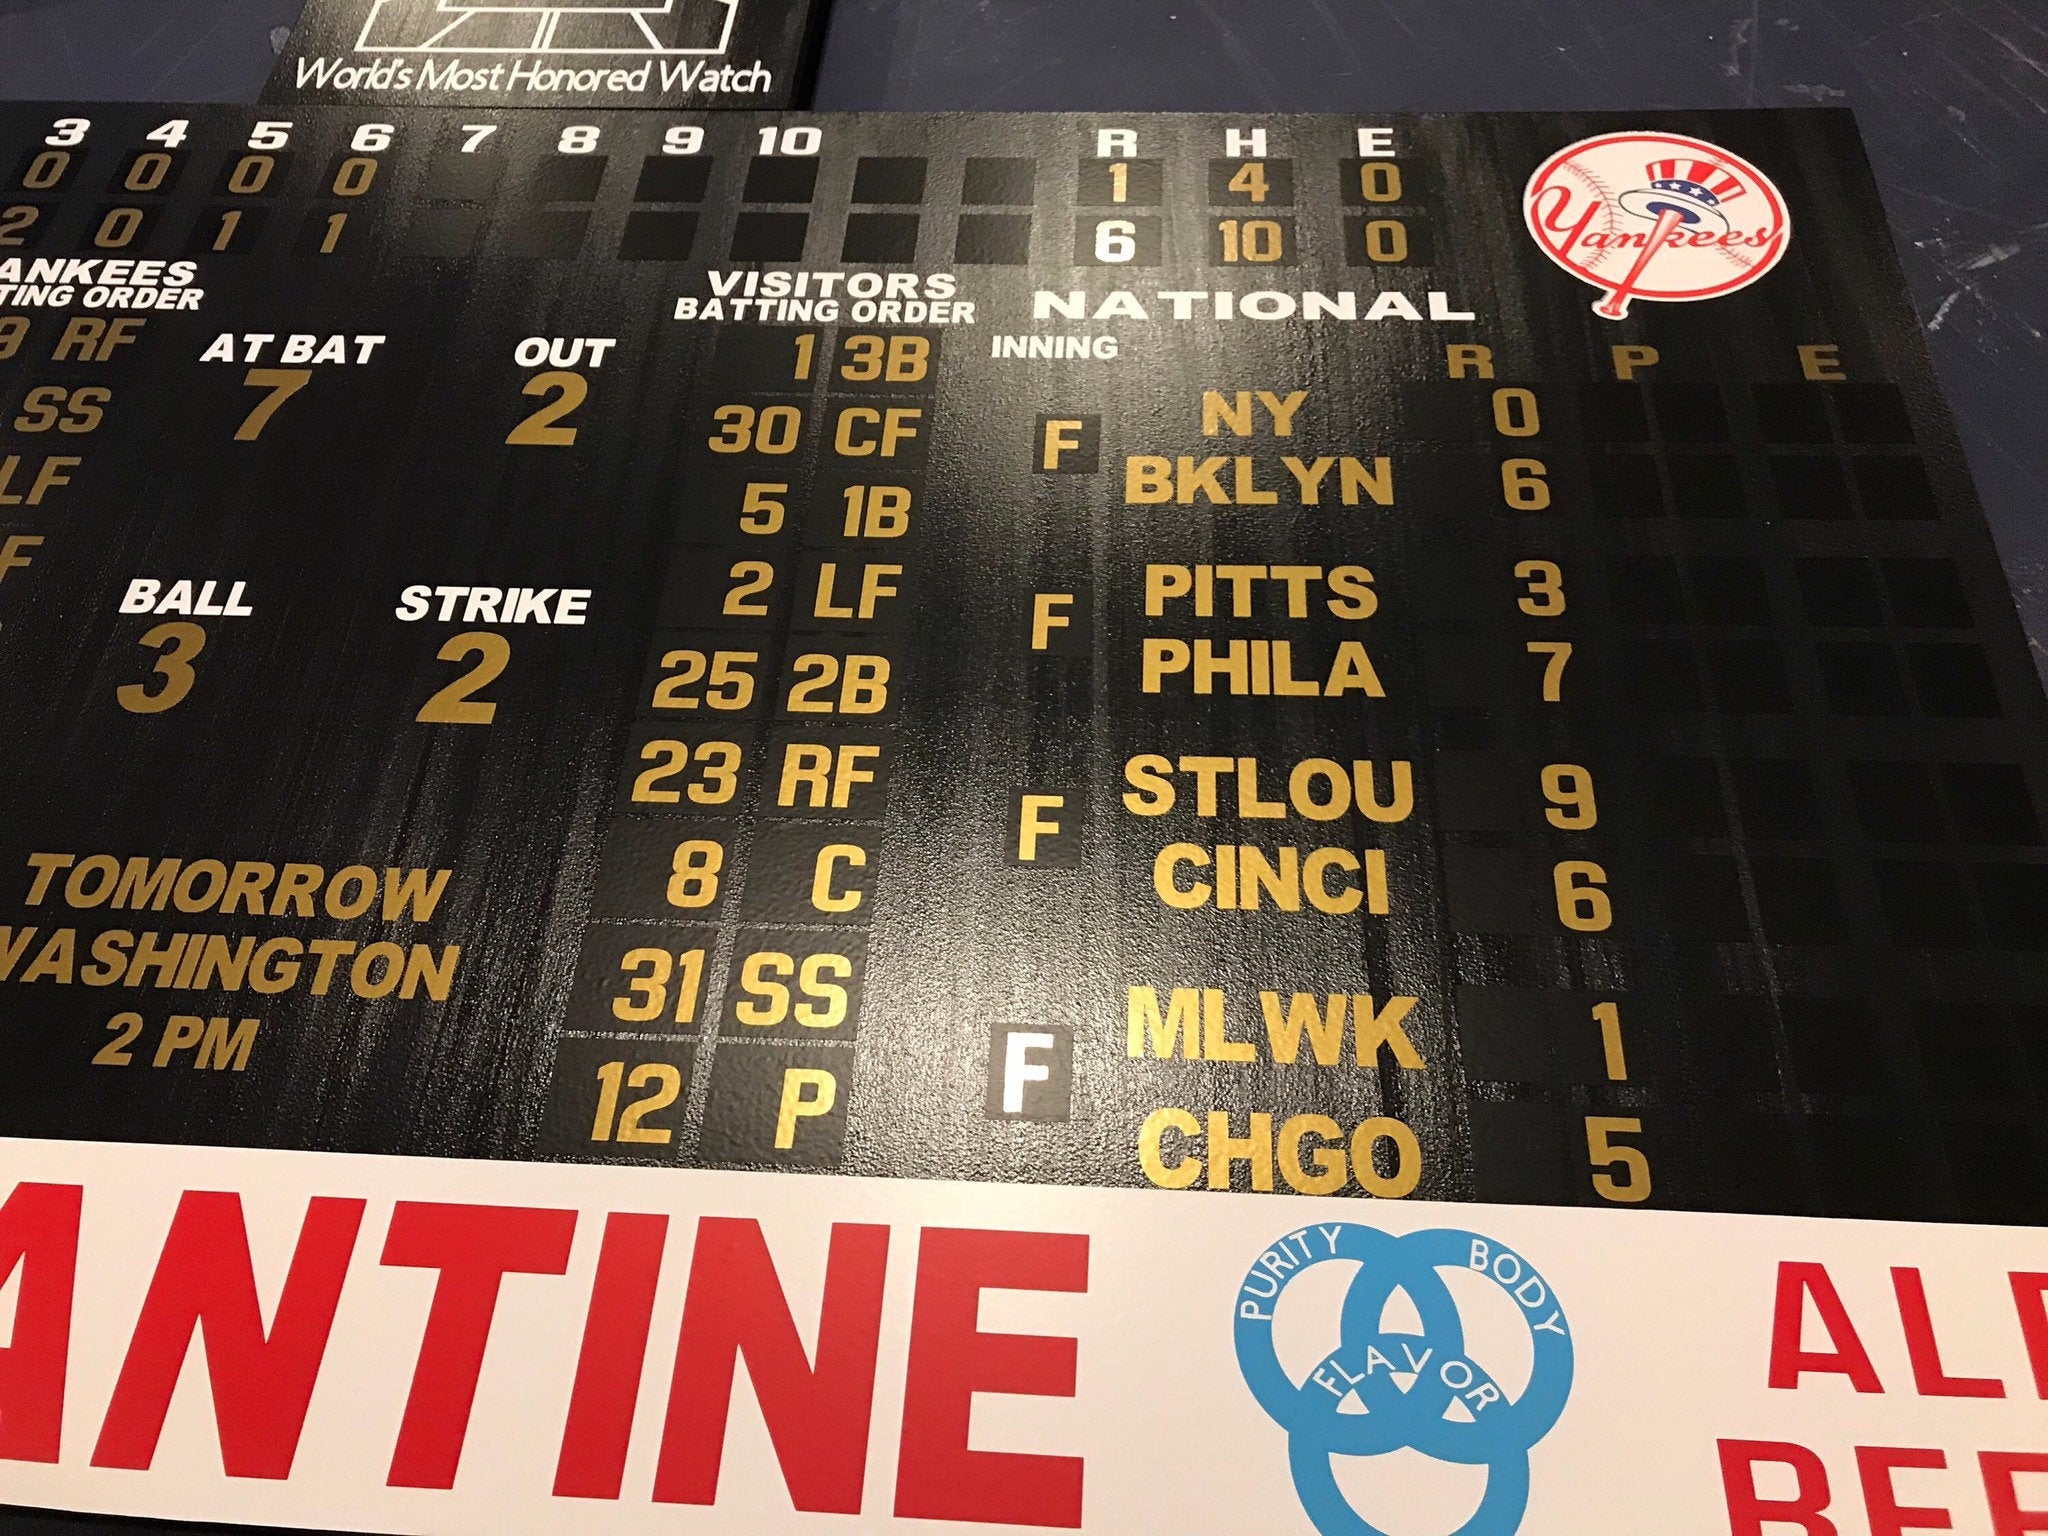 Yankee Stadium scoreboard